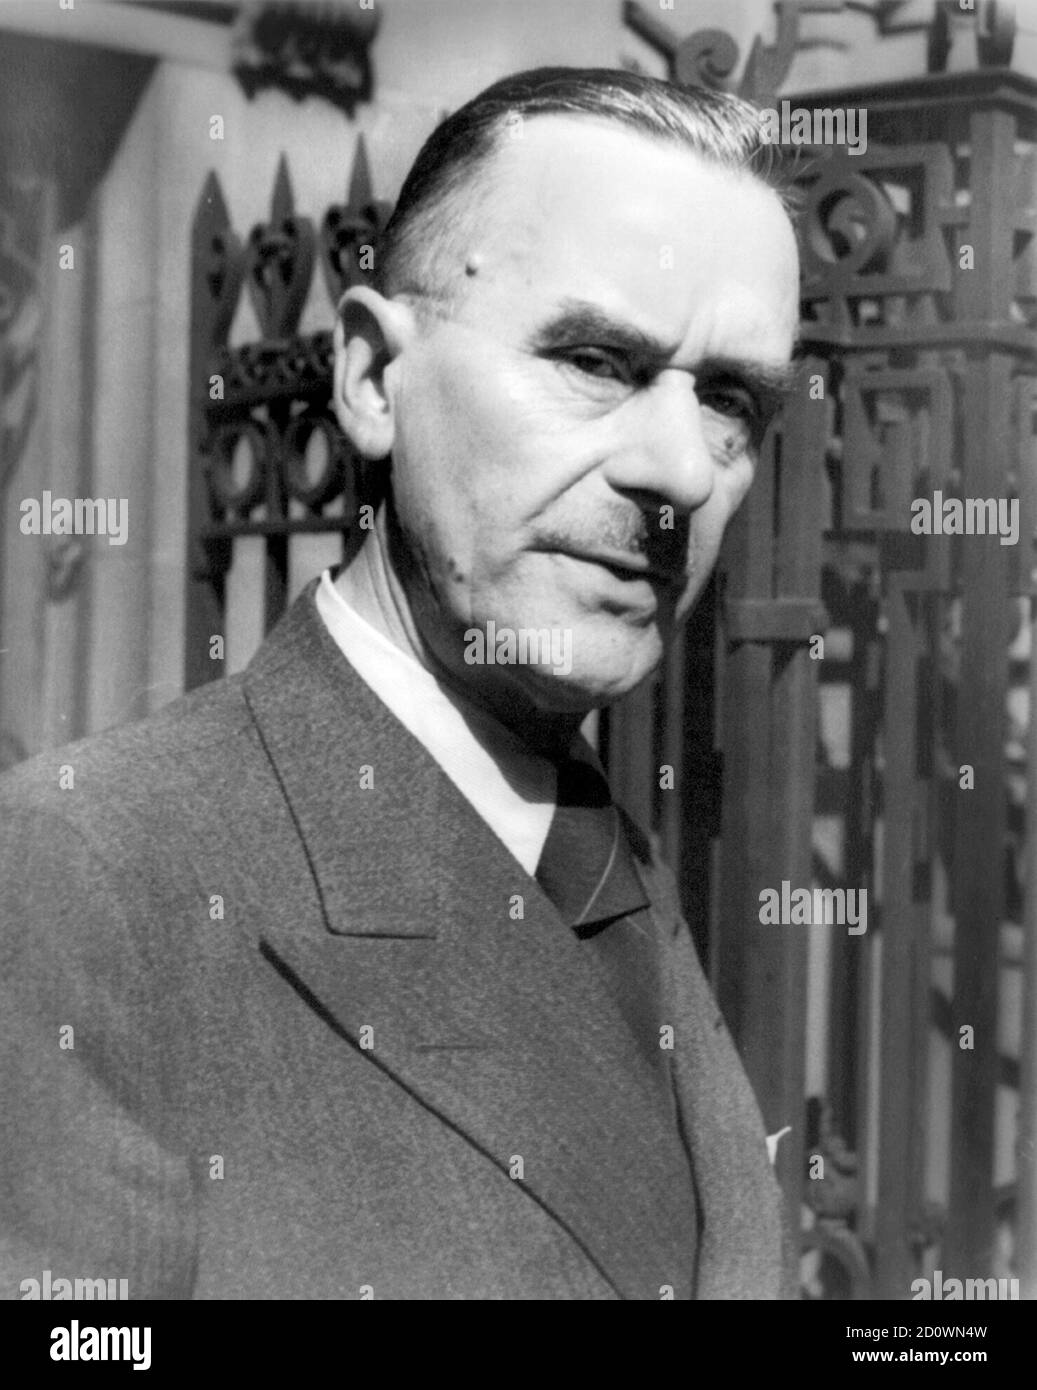 Thomas Mann. Ritratto dello scrittore tedesco Paul Thomas Mann (1875-1955) di Carl Van Vechten, 1937 Foto Stock